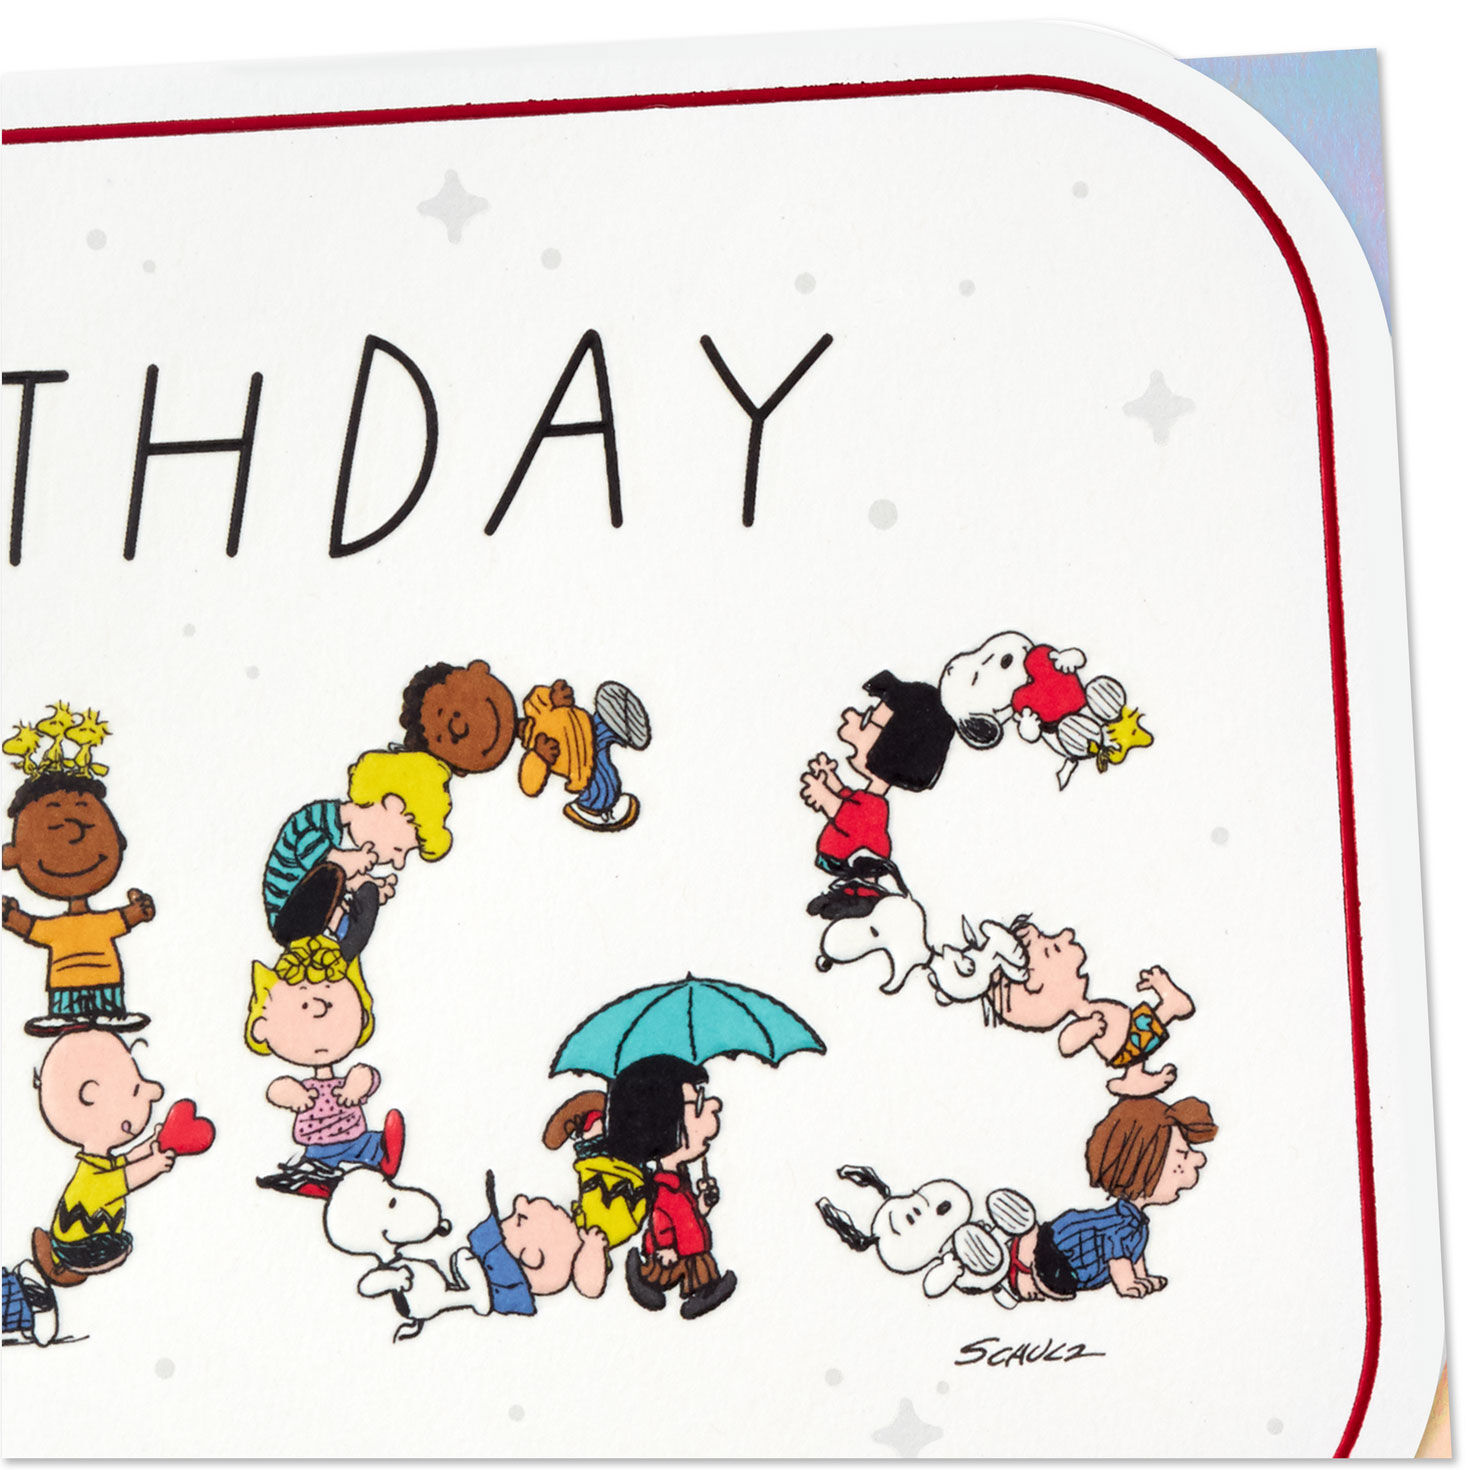 Peanuts Soak Up the Love Birthday Card for only USD 5.99 | Hallmark